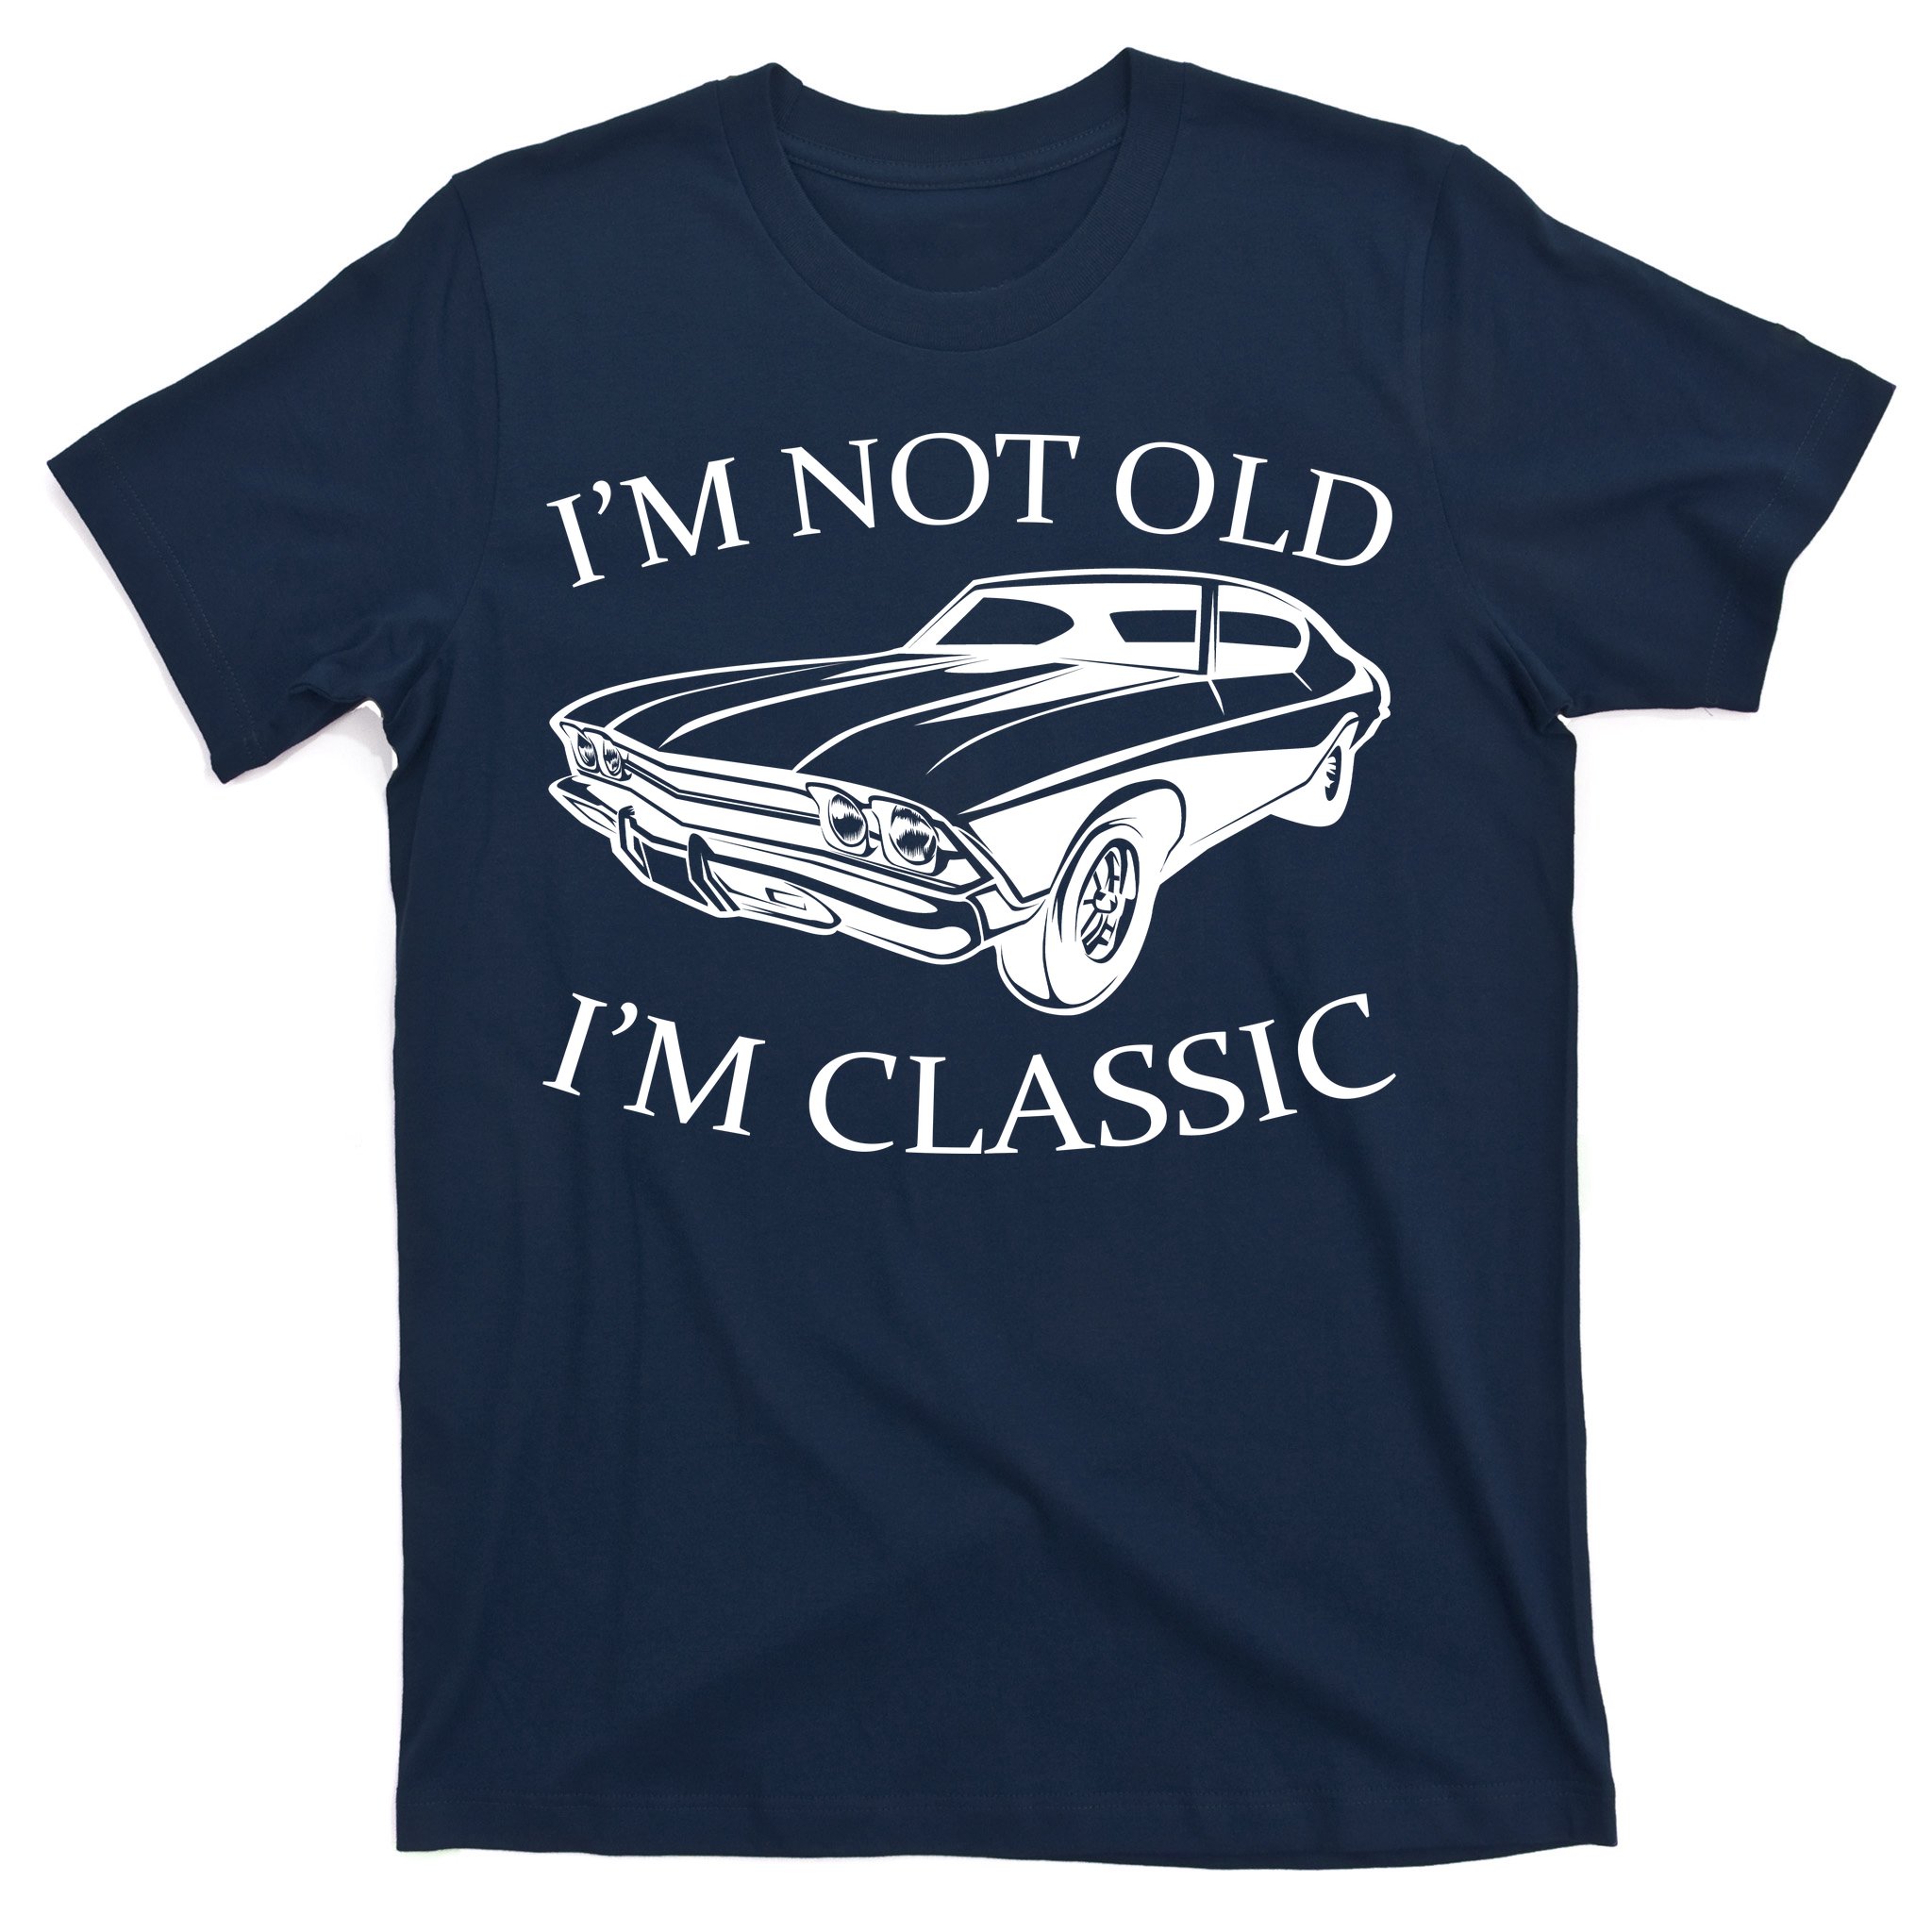 I'M NOT OLD 1965 CAR T-SHIRT